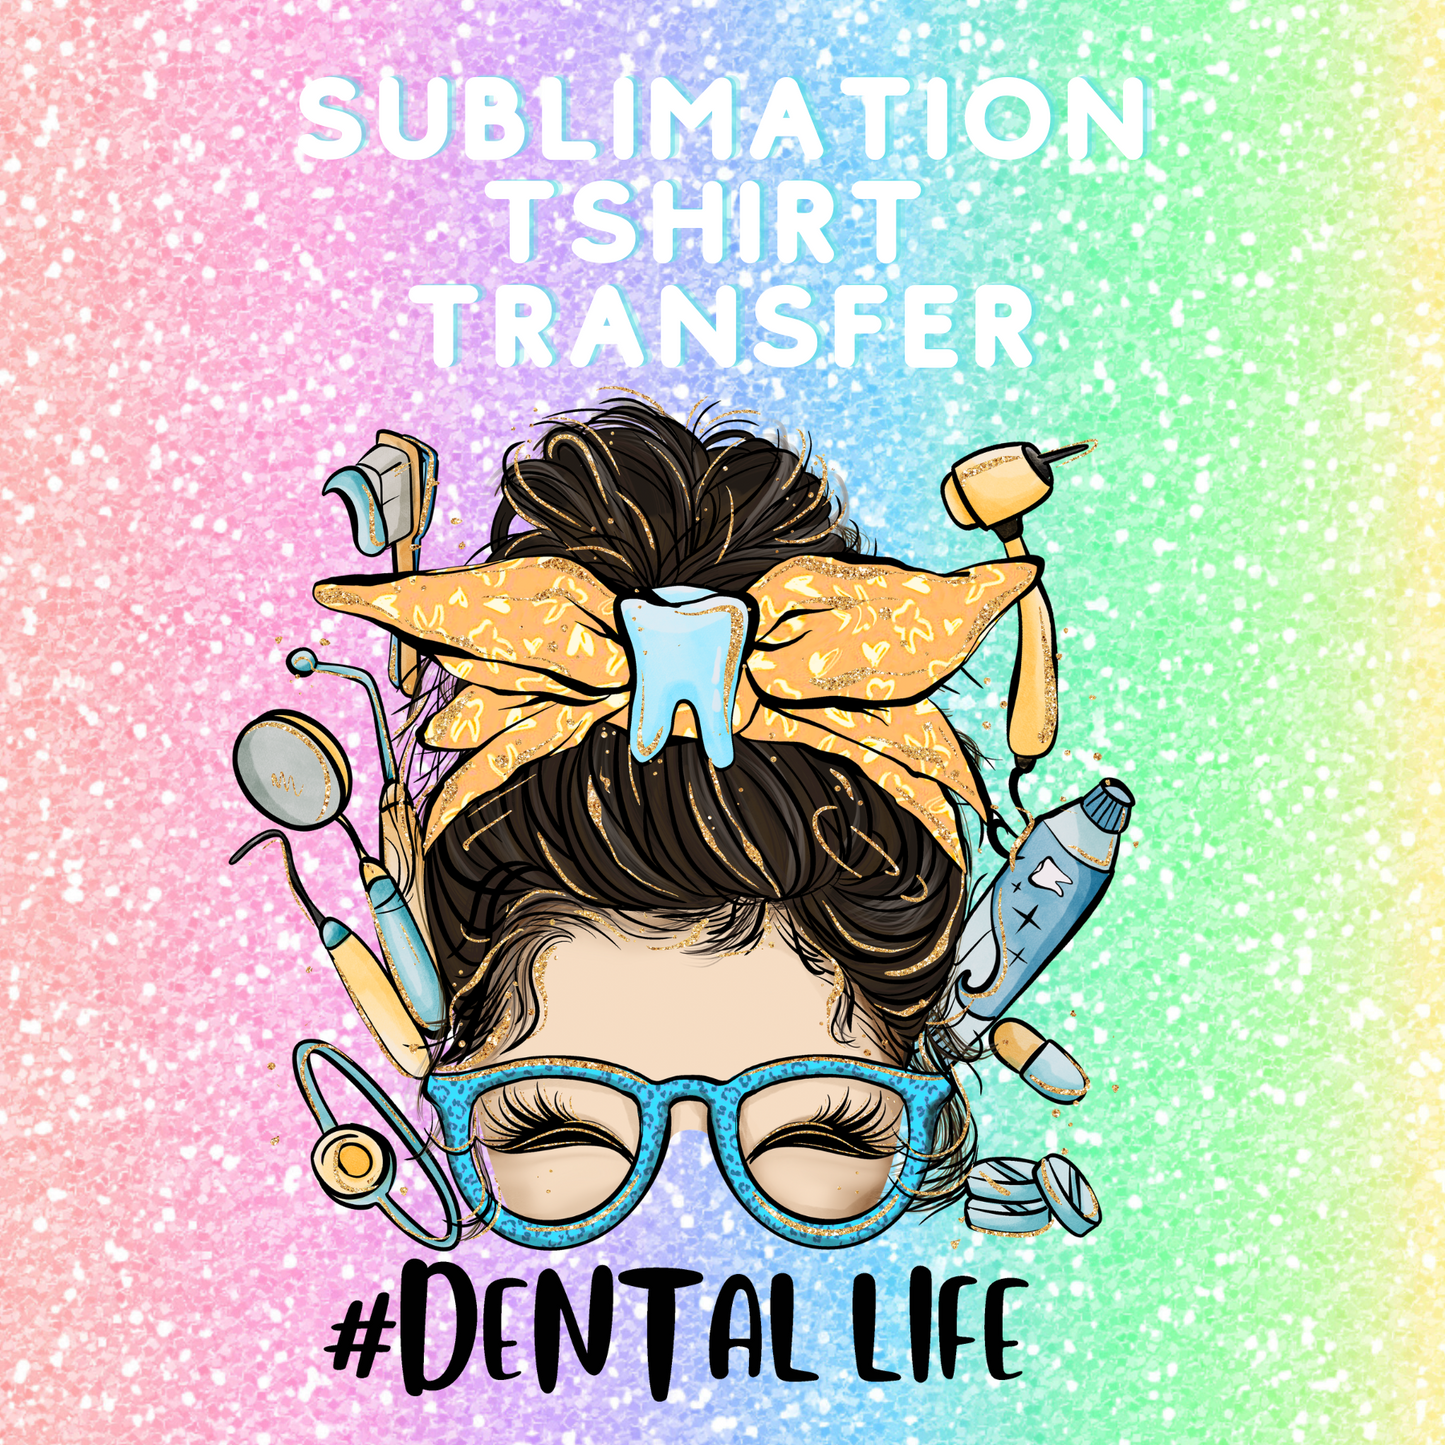 Sublimation Transfer - Dental Life